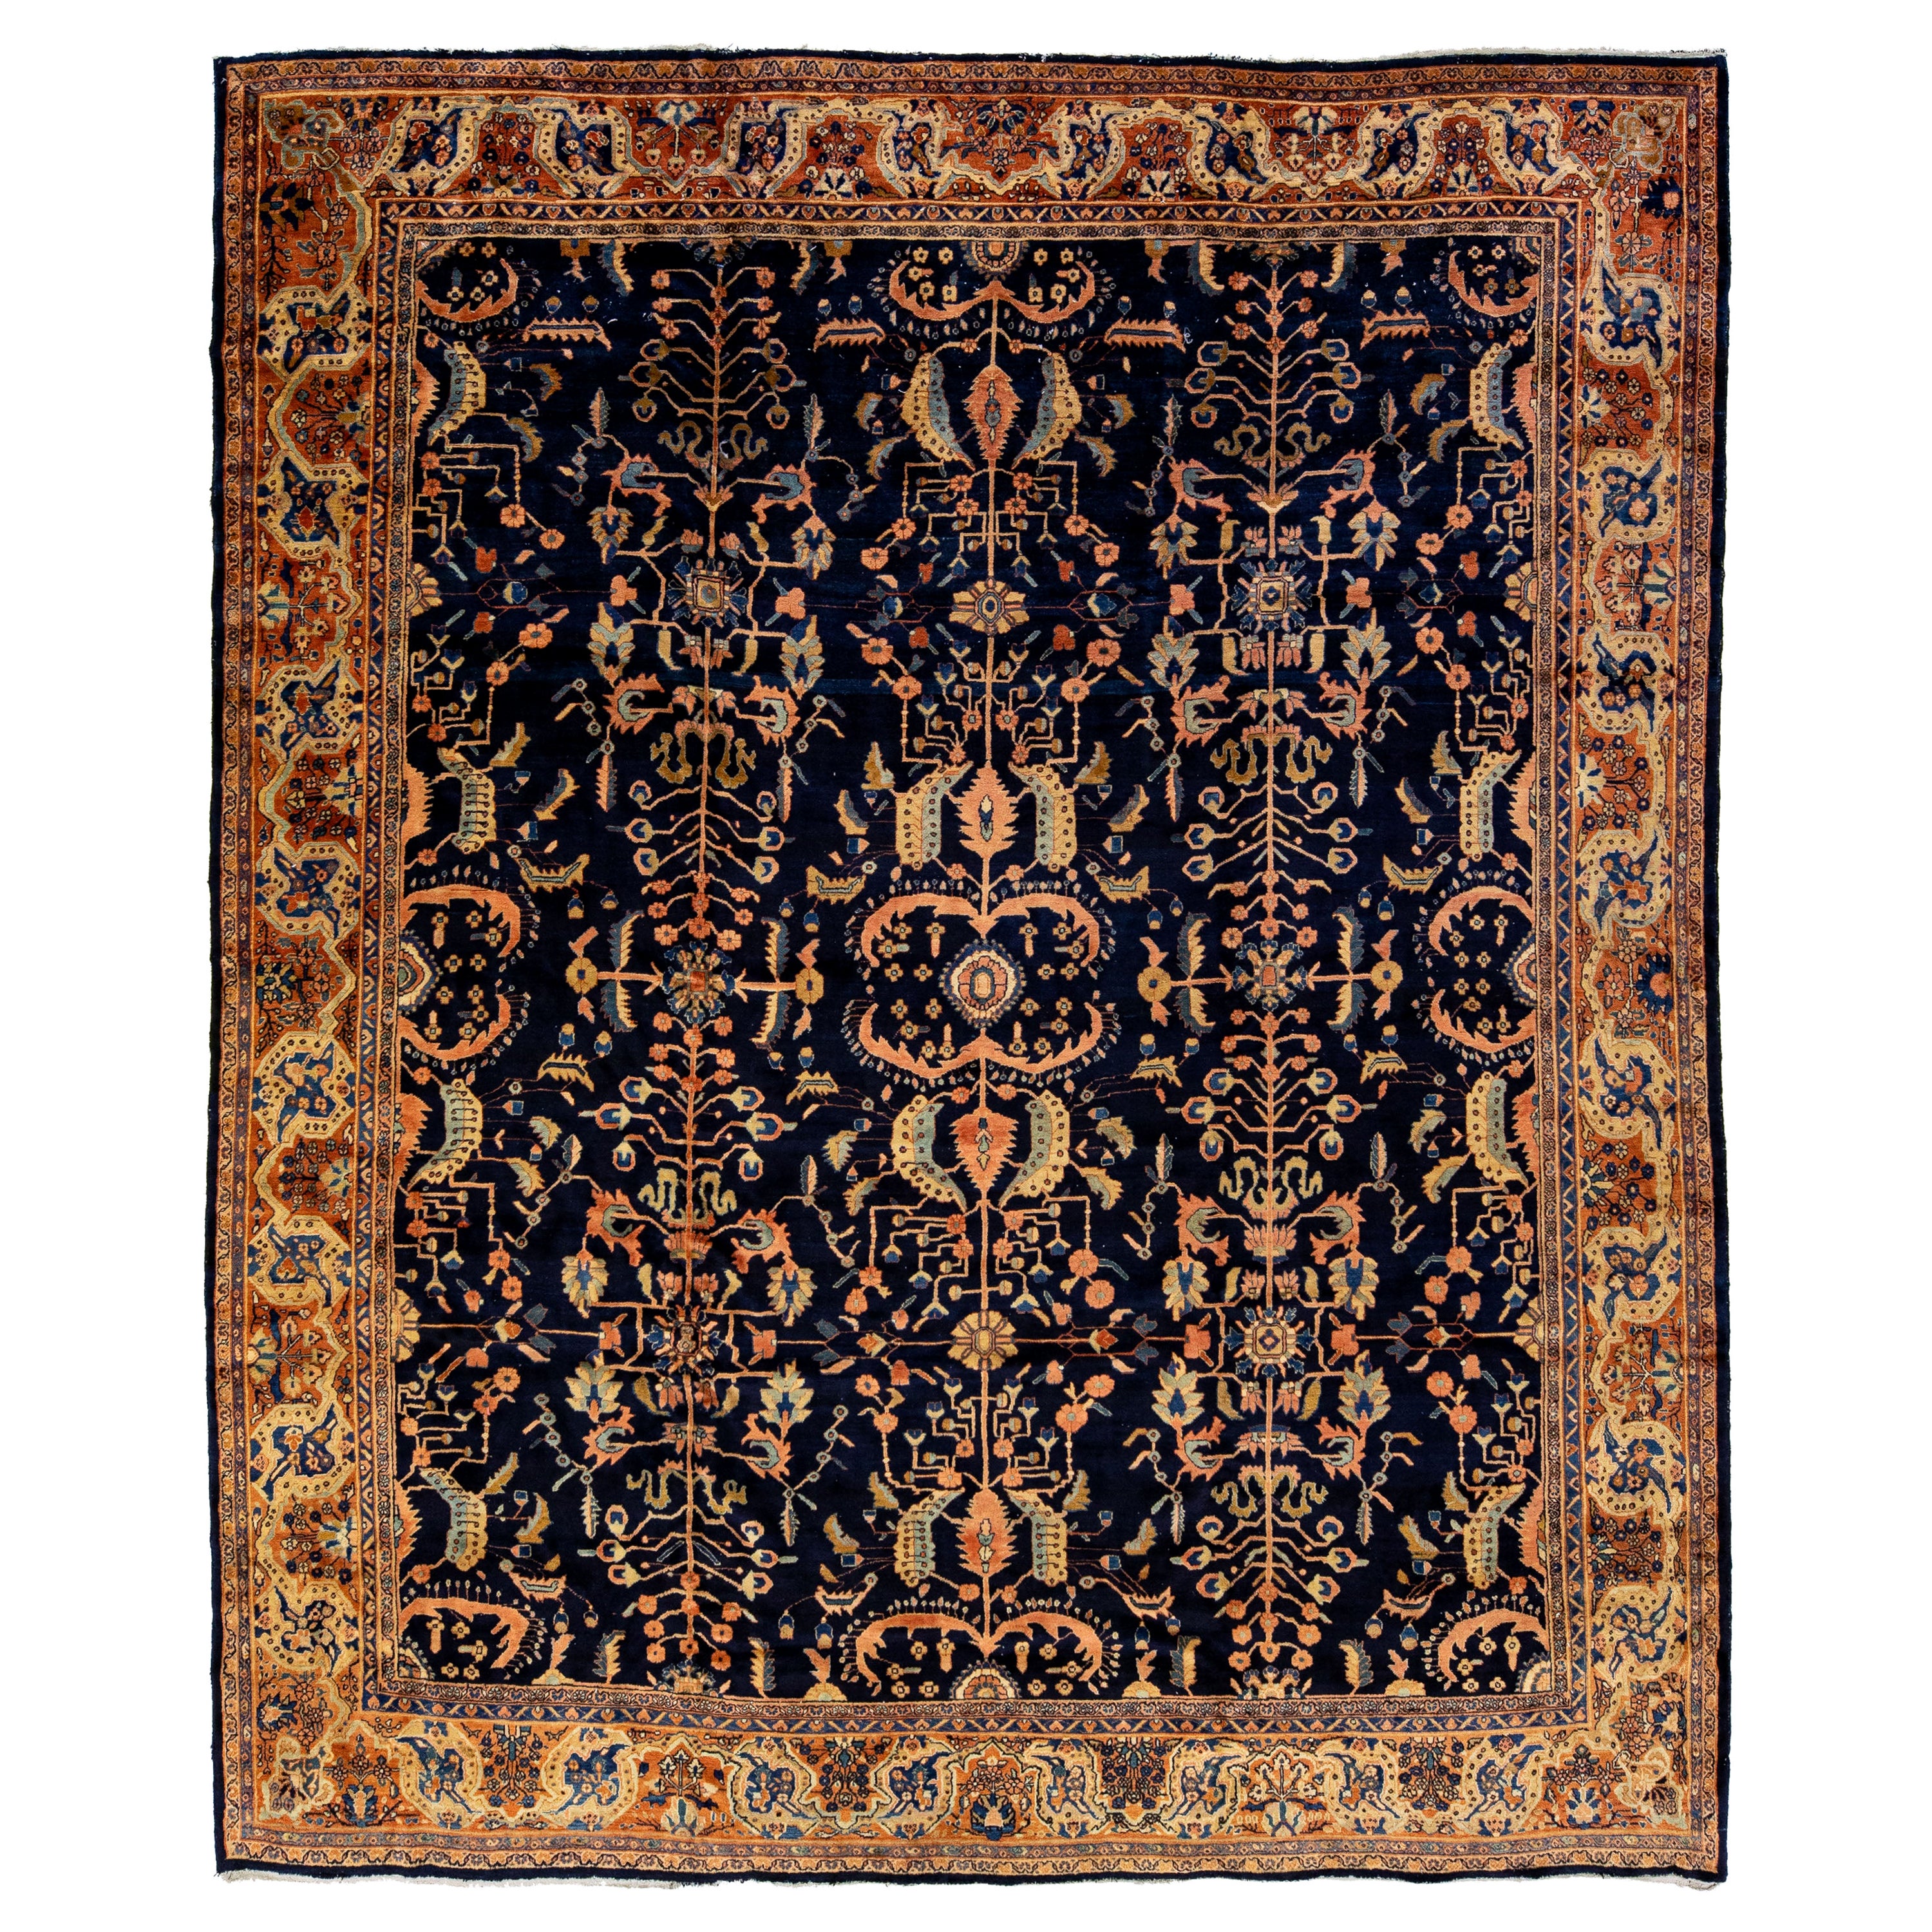 Antique Sarouk Farahan Handmade Dark Blue Persian Wool Rug with Floral Pattern